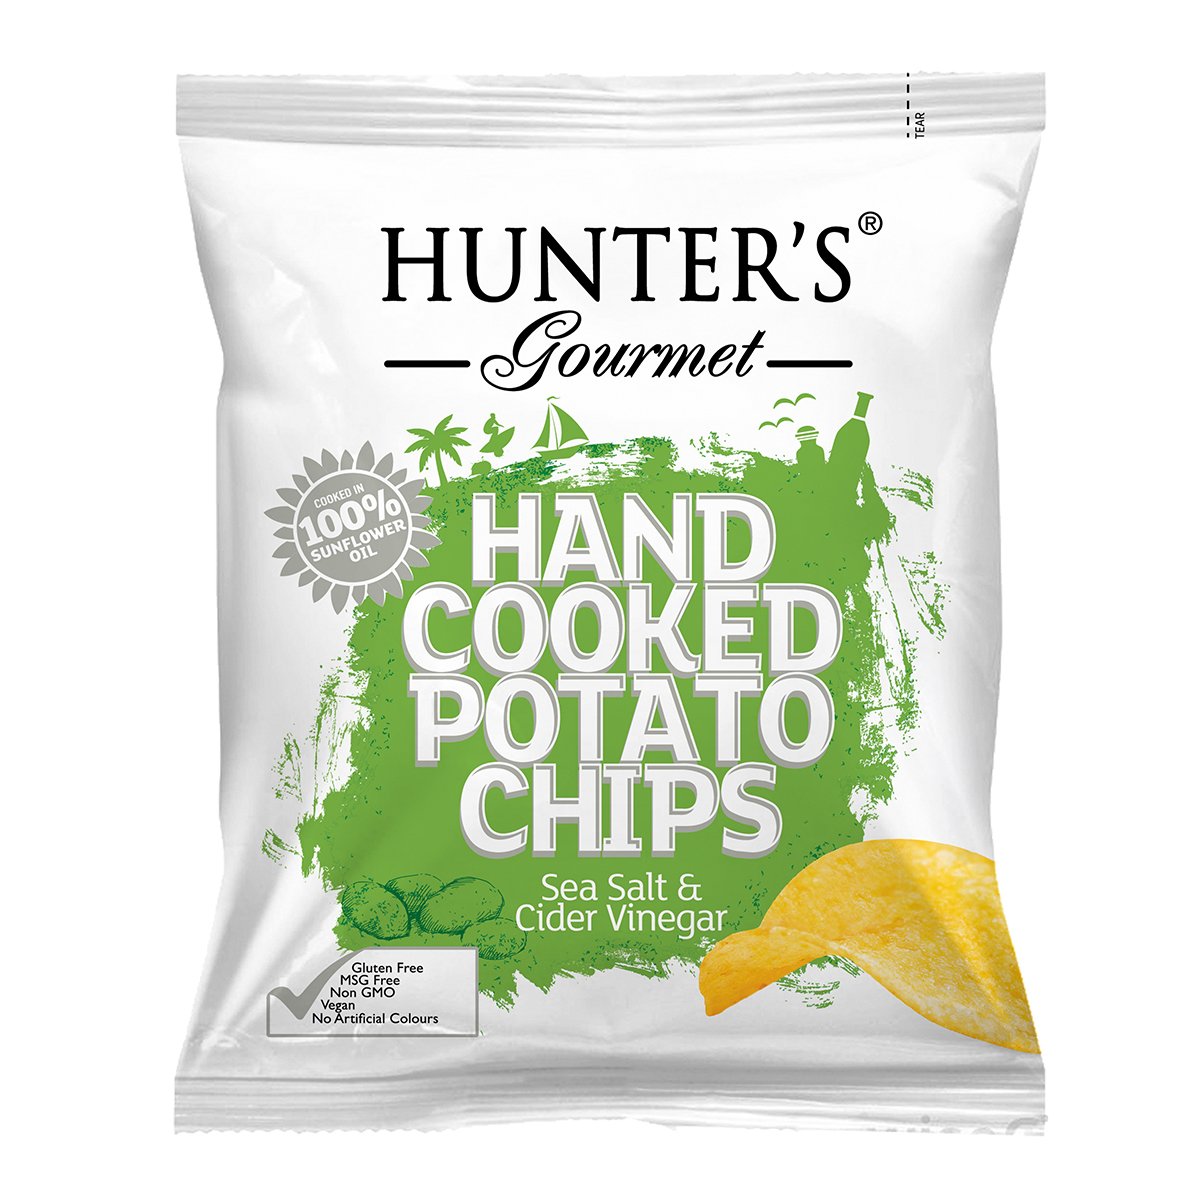 HUNTER'S GOURMET Hand Cooked Potato Chips Sea Salt & Cider Vinegar, 40g